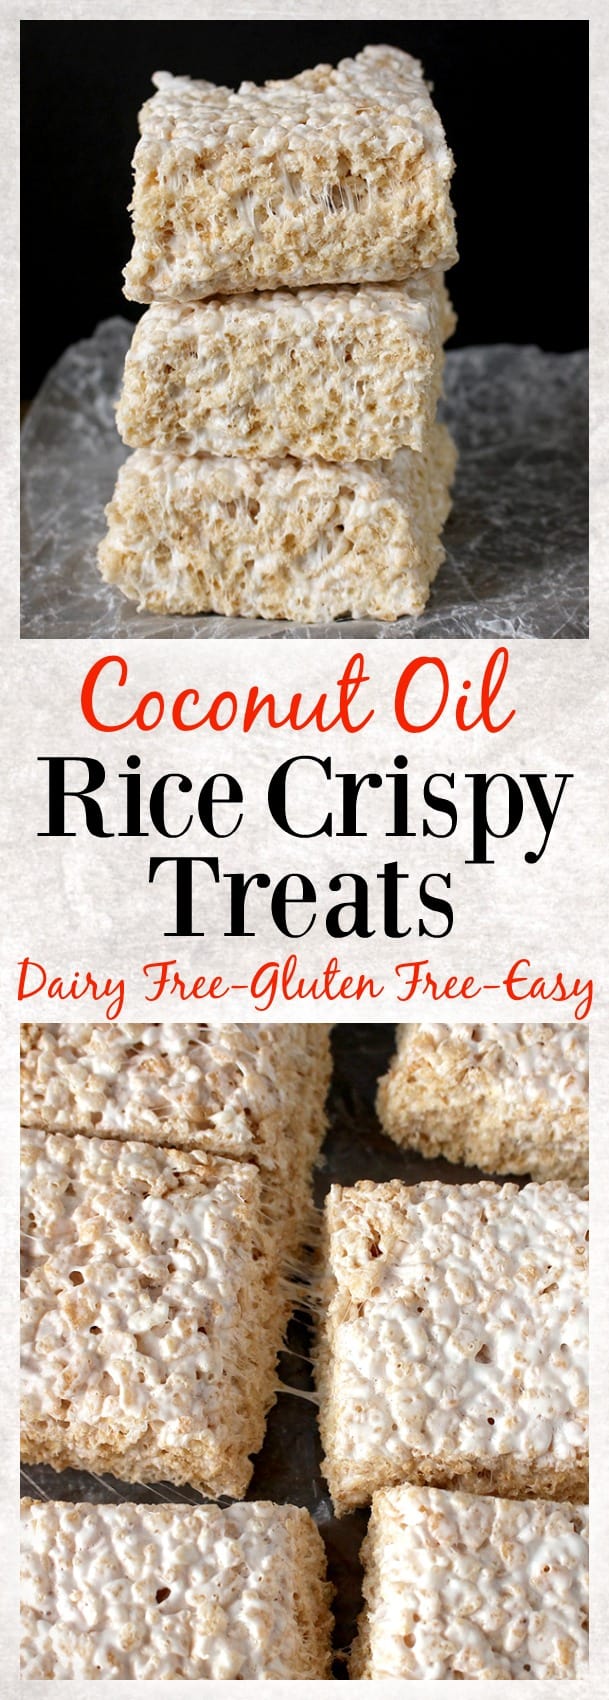 Coconut Oil Rice Crispy Treats